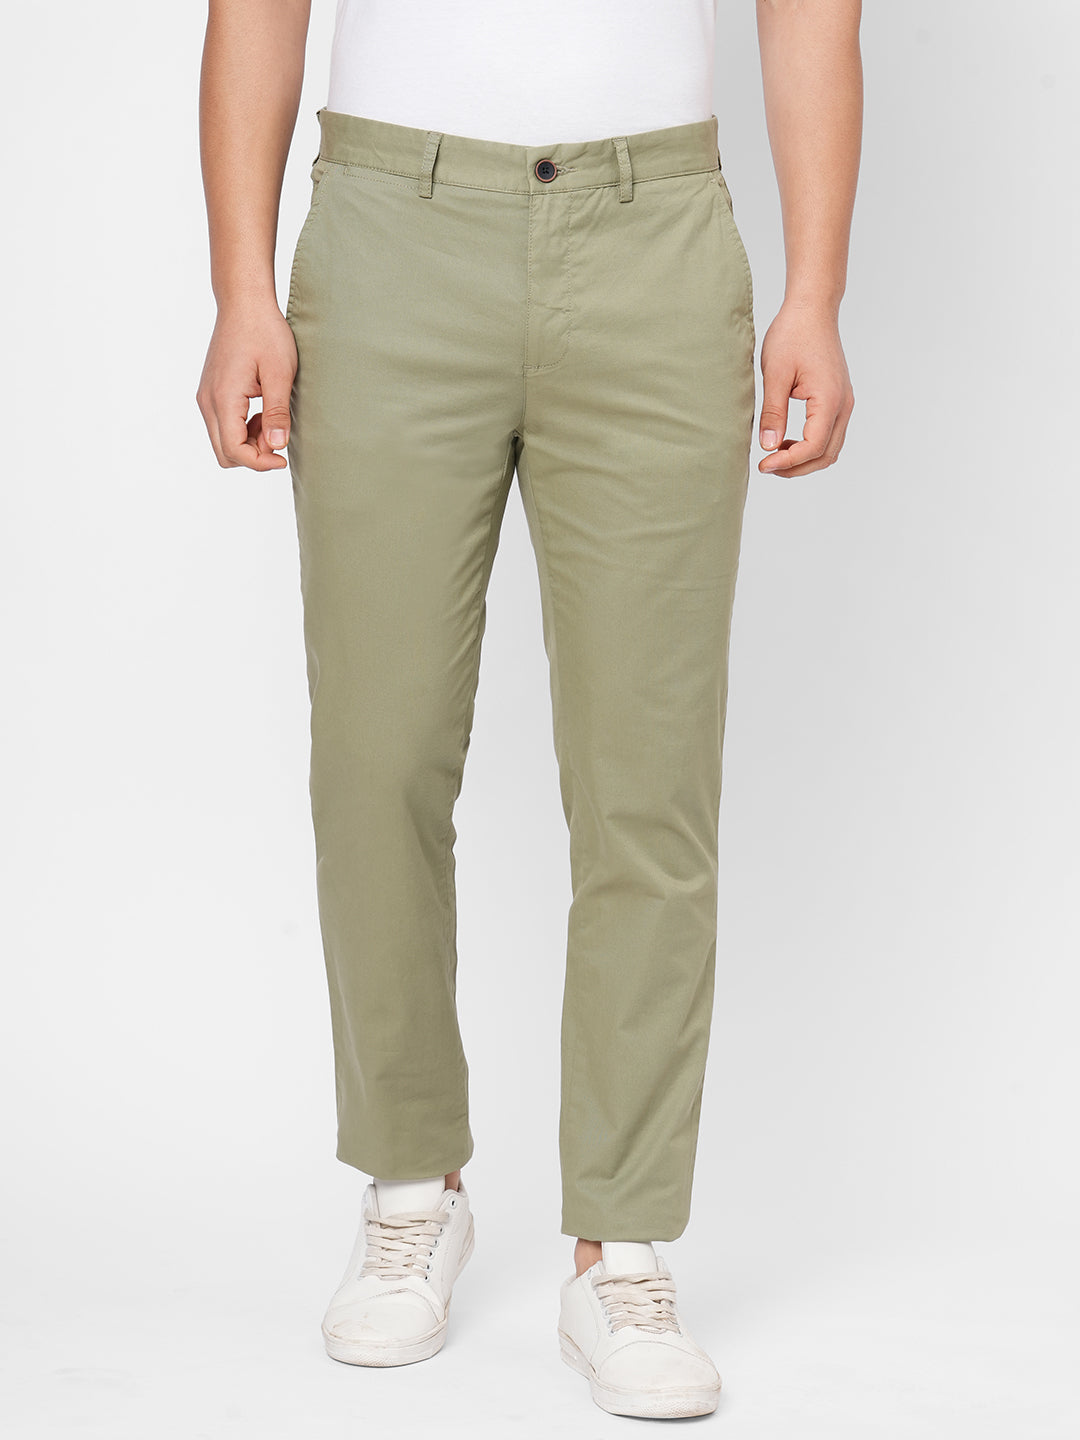 Buy Men's Cotton Lycra Casual Wear Slim Fit Pants